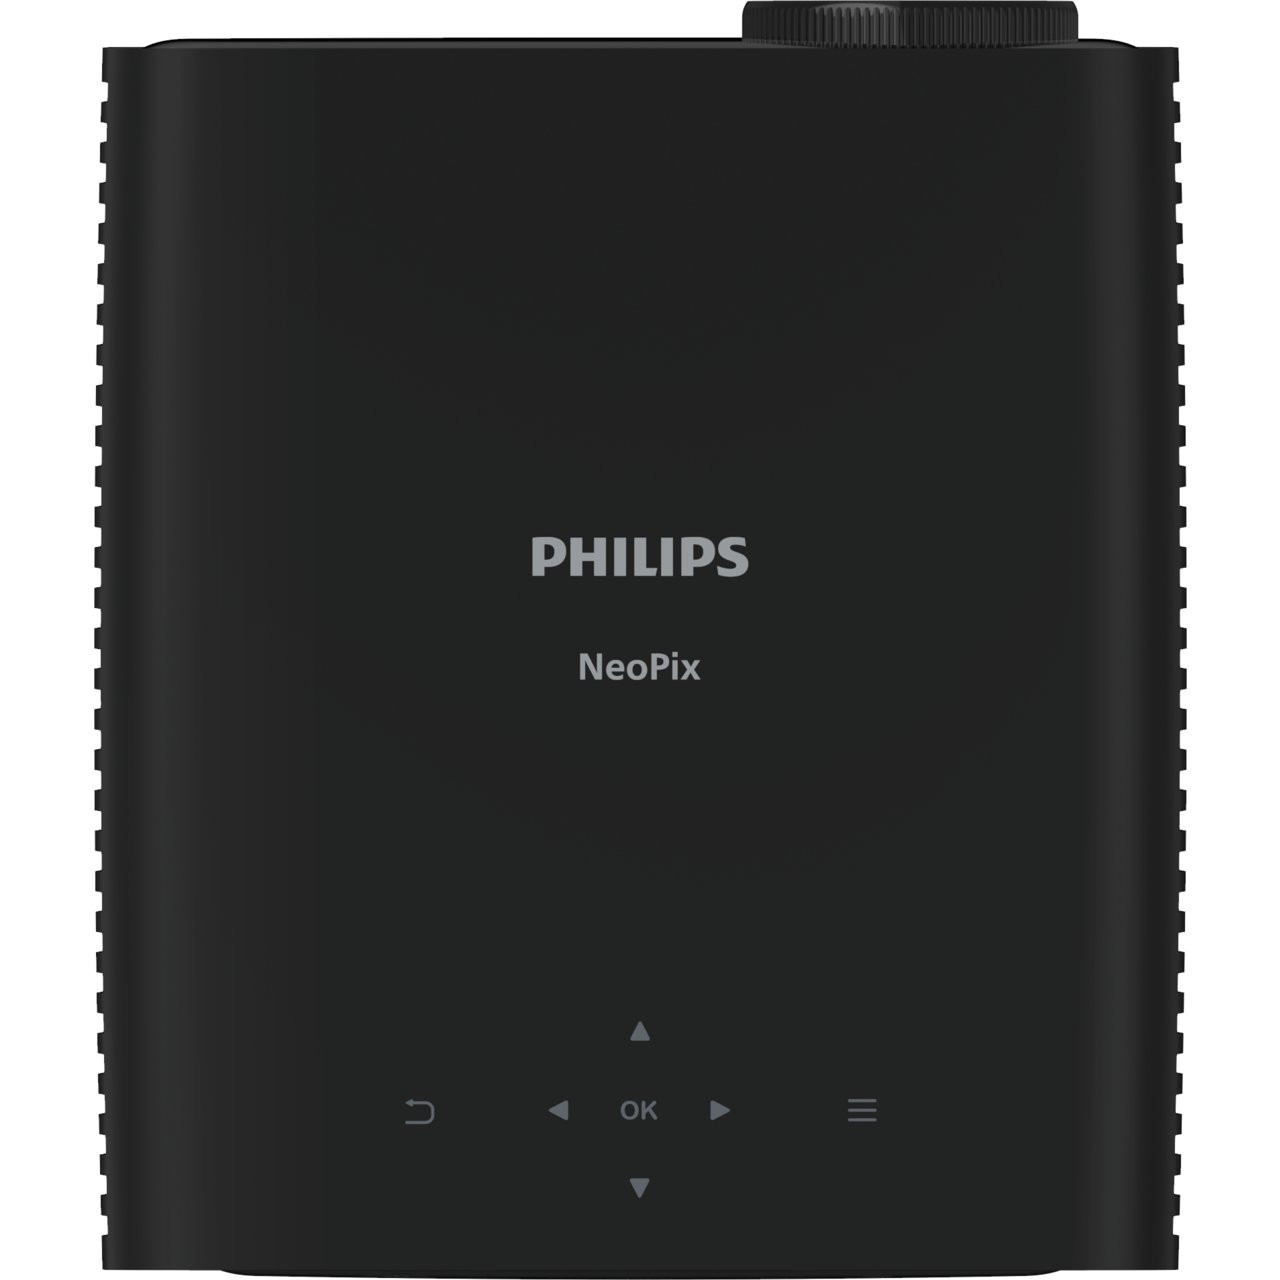 Proyector Philips NeoPix320 250 Ansi Lumenes : Vizmark